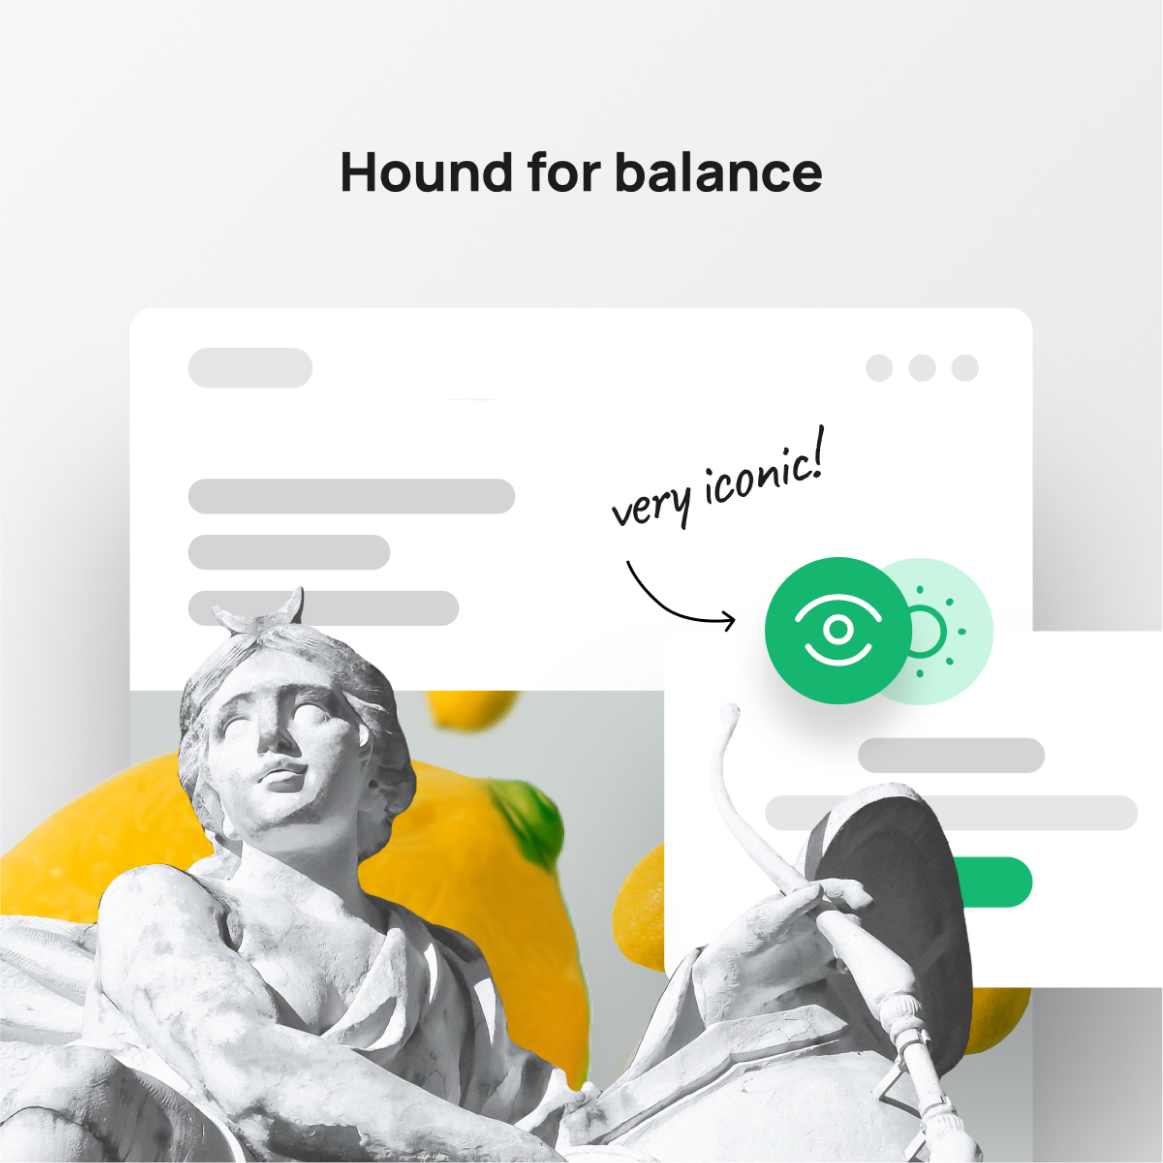 Hound for balance